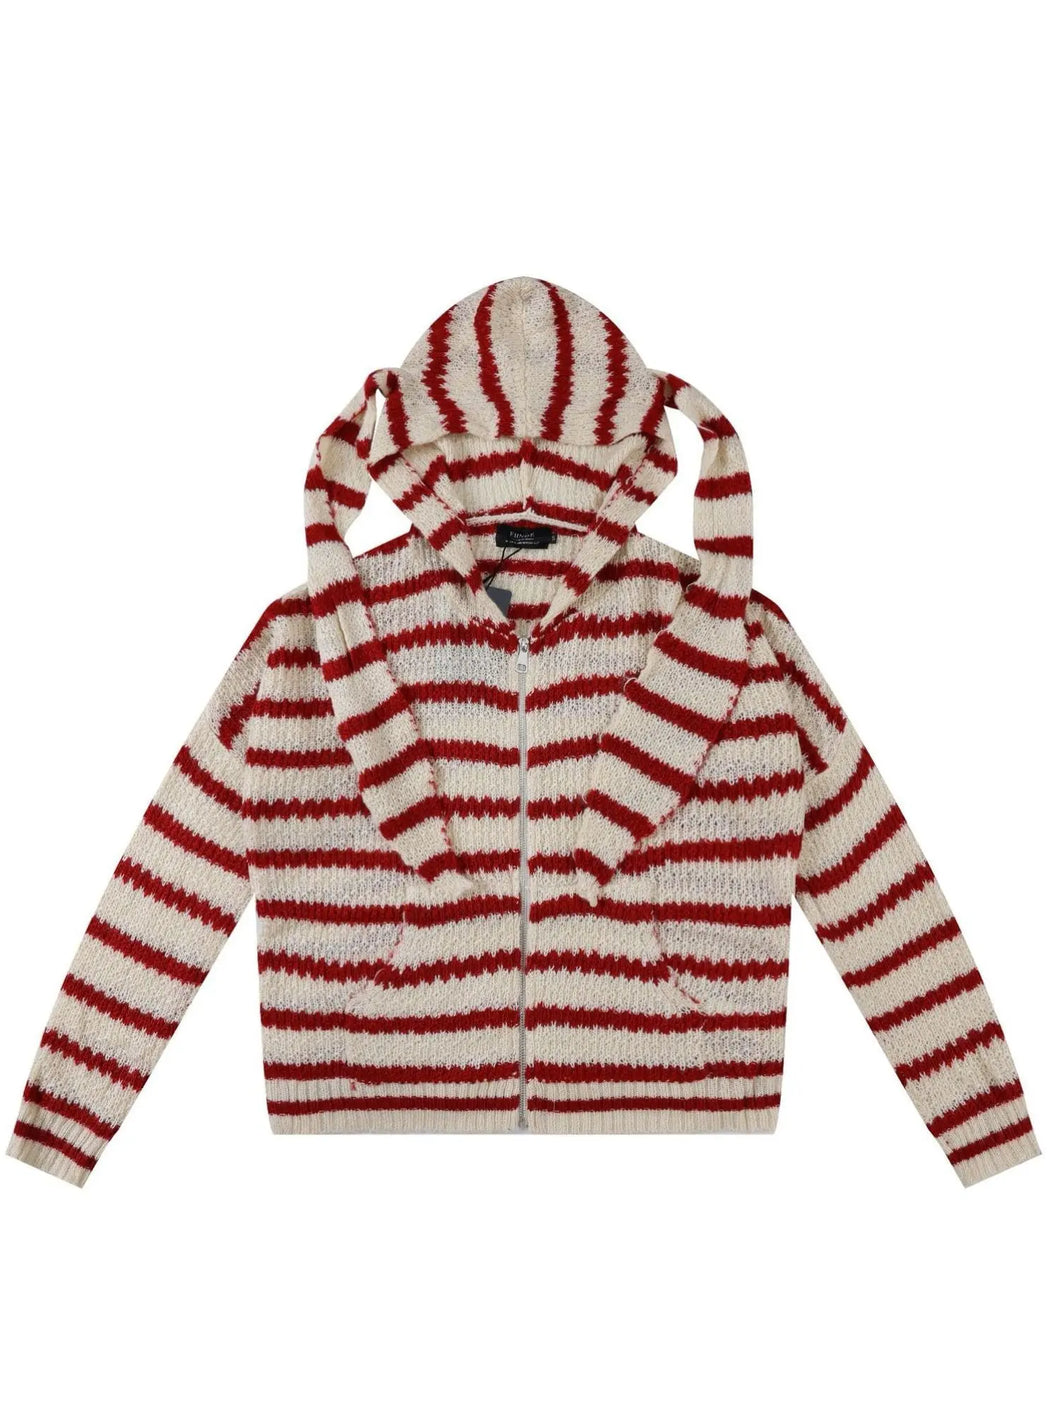 'Bunny ear' retro Striped hooded knitted sweater AlielNosirrah